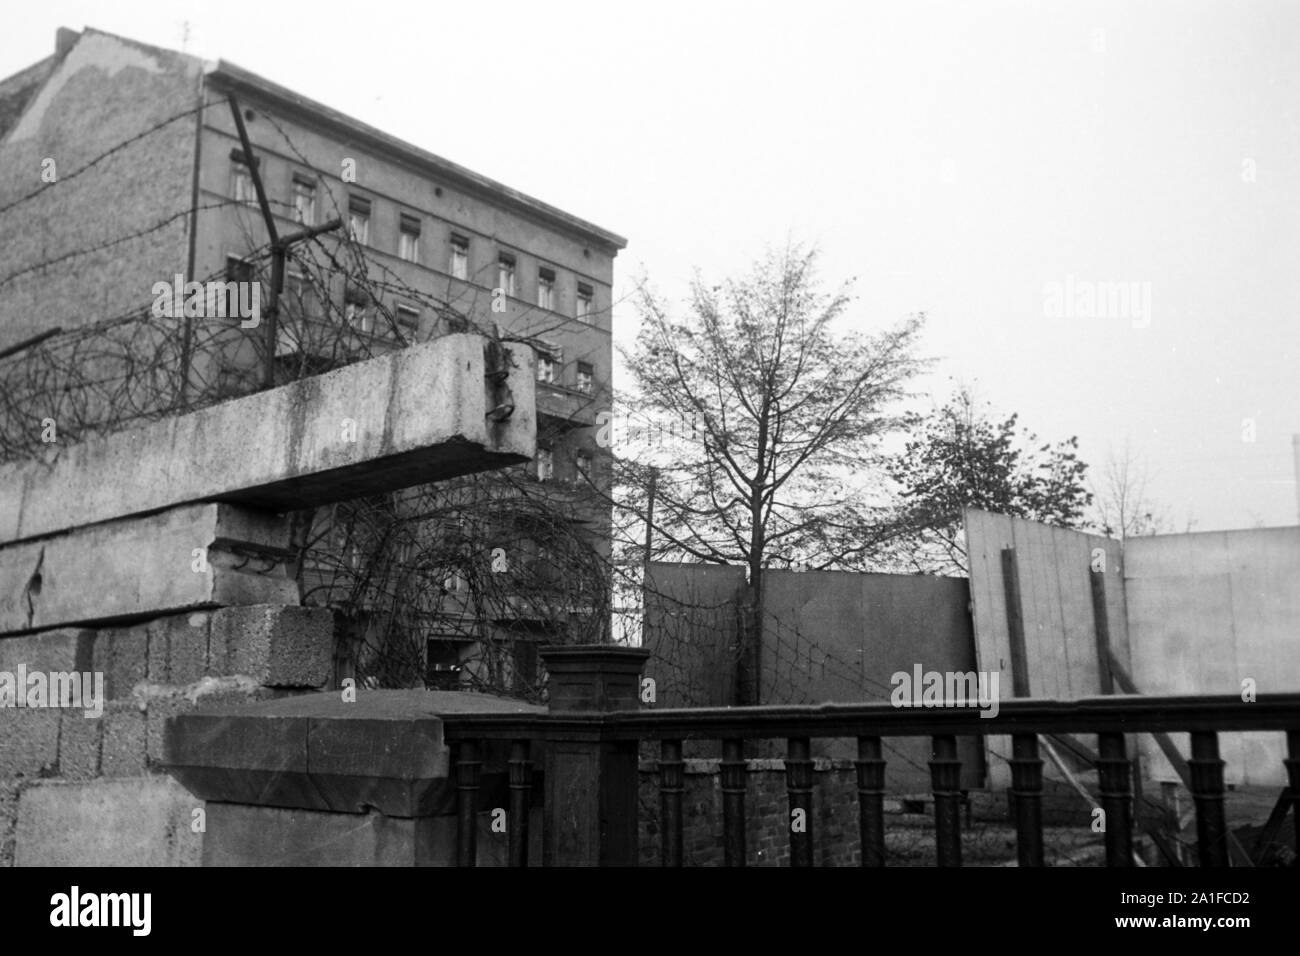 Sichtschutz an der Grenze des amerikanischen Sektors in Berlino, Deutschland 1962. Ciechi al confine del settore americano di Berlino in Germania 1962. Foto Stock